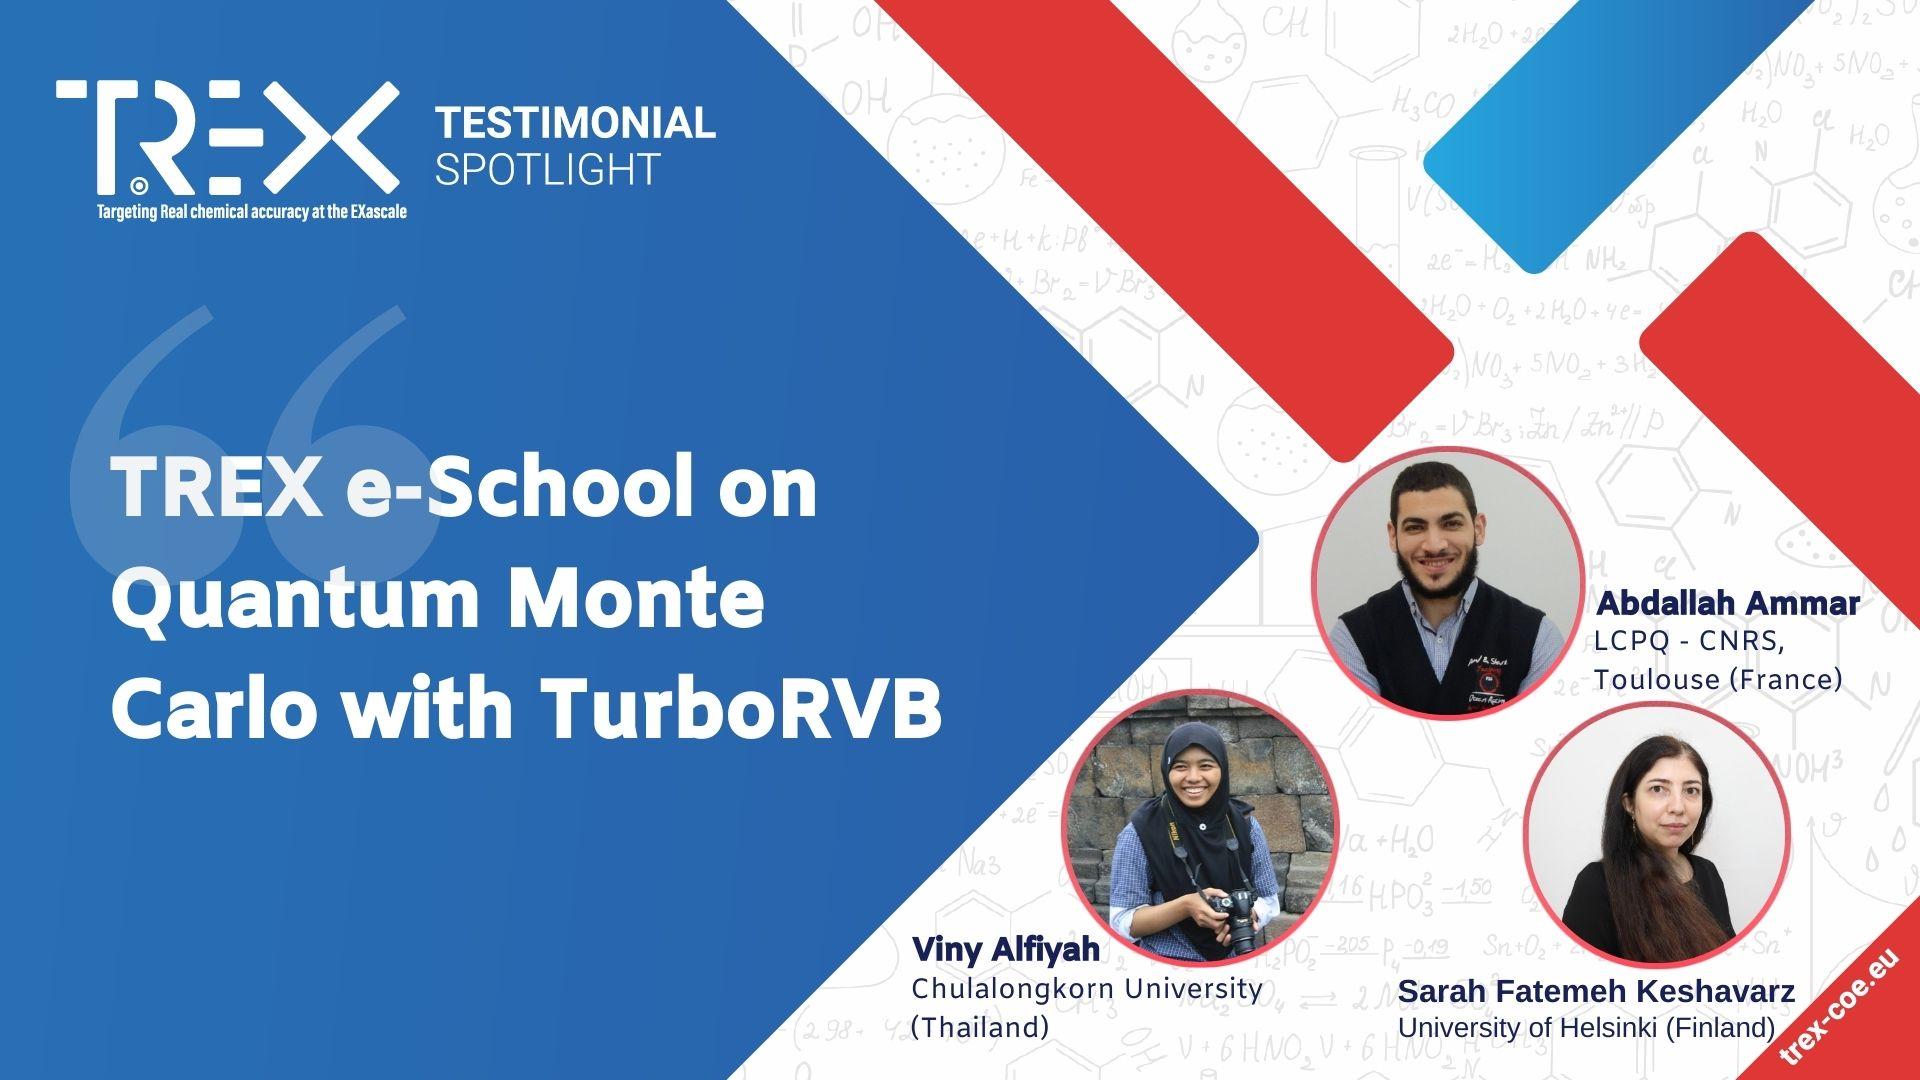 Testimonial: TREX e-School on Quantum Monte Carlo with TurboRVB